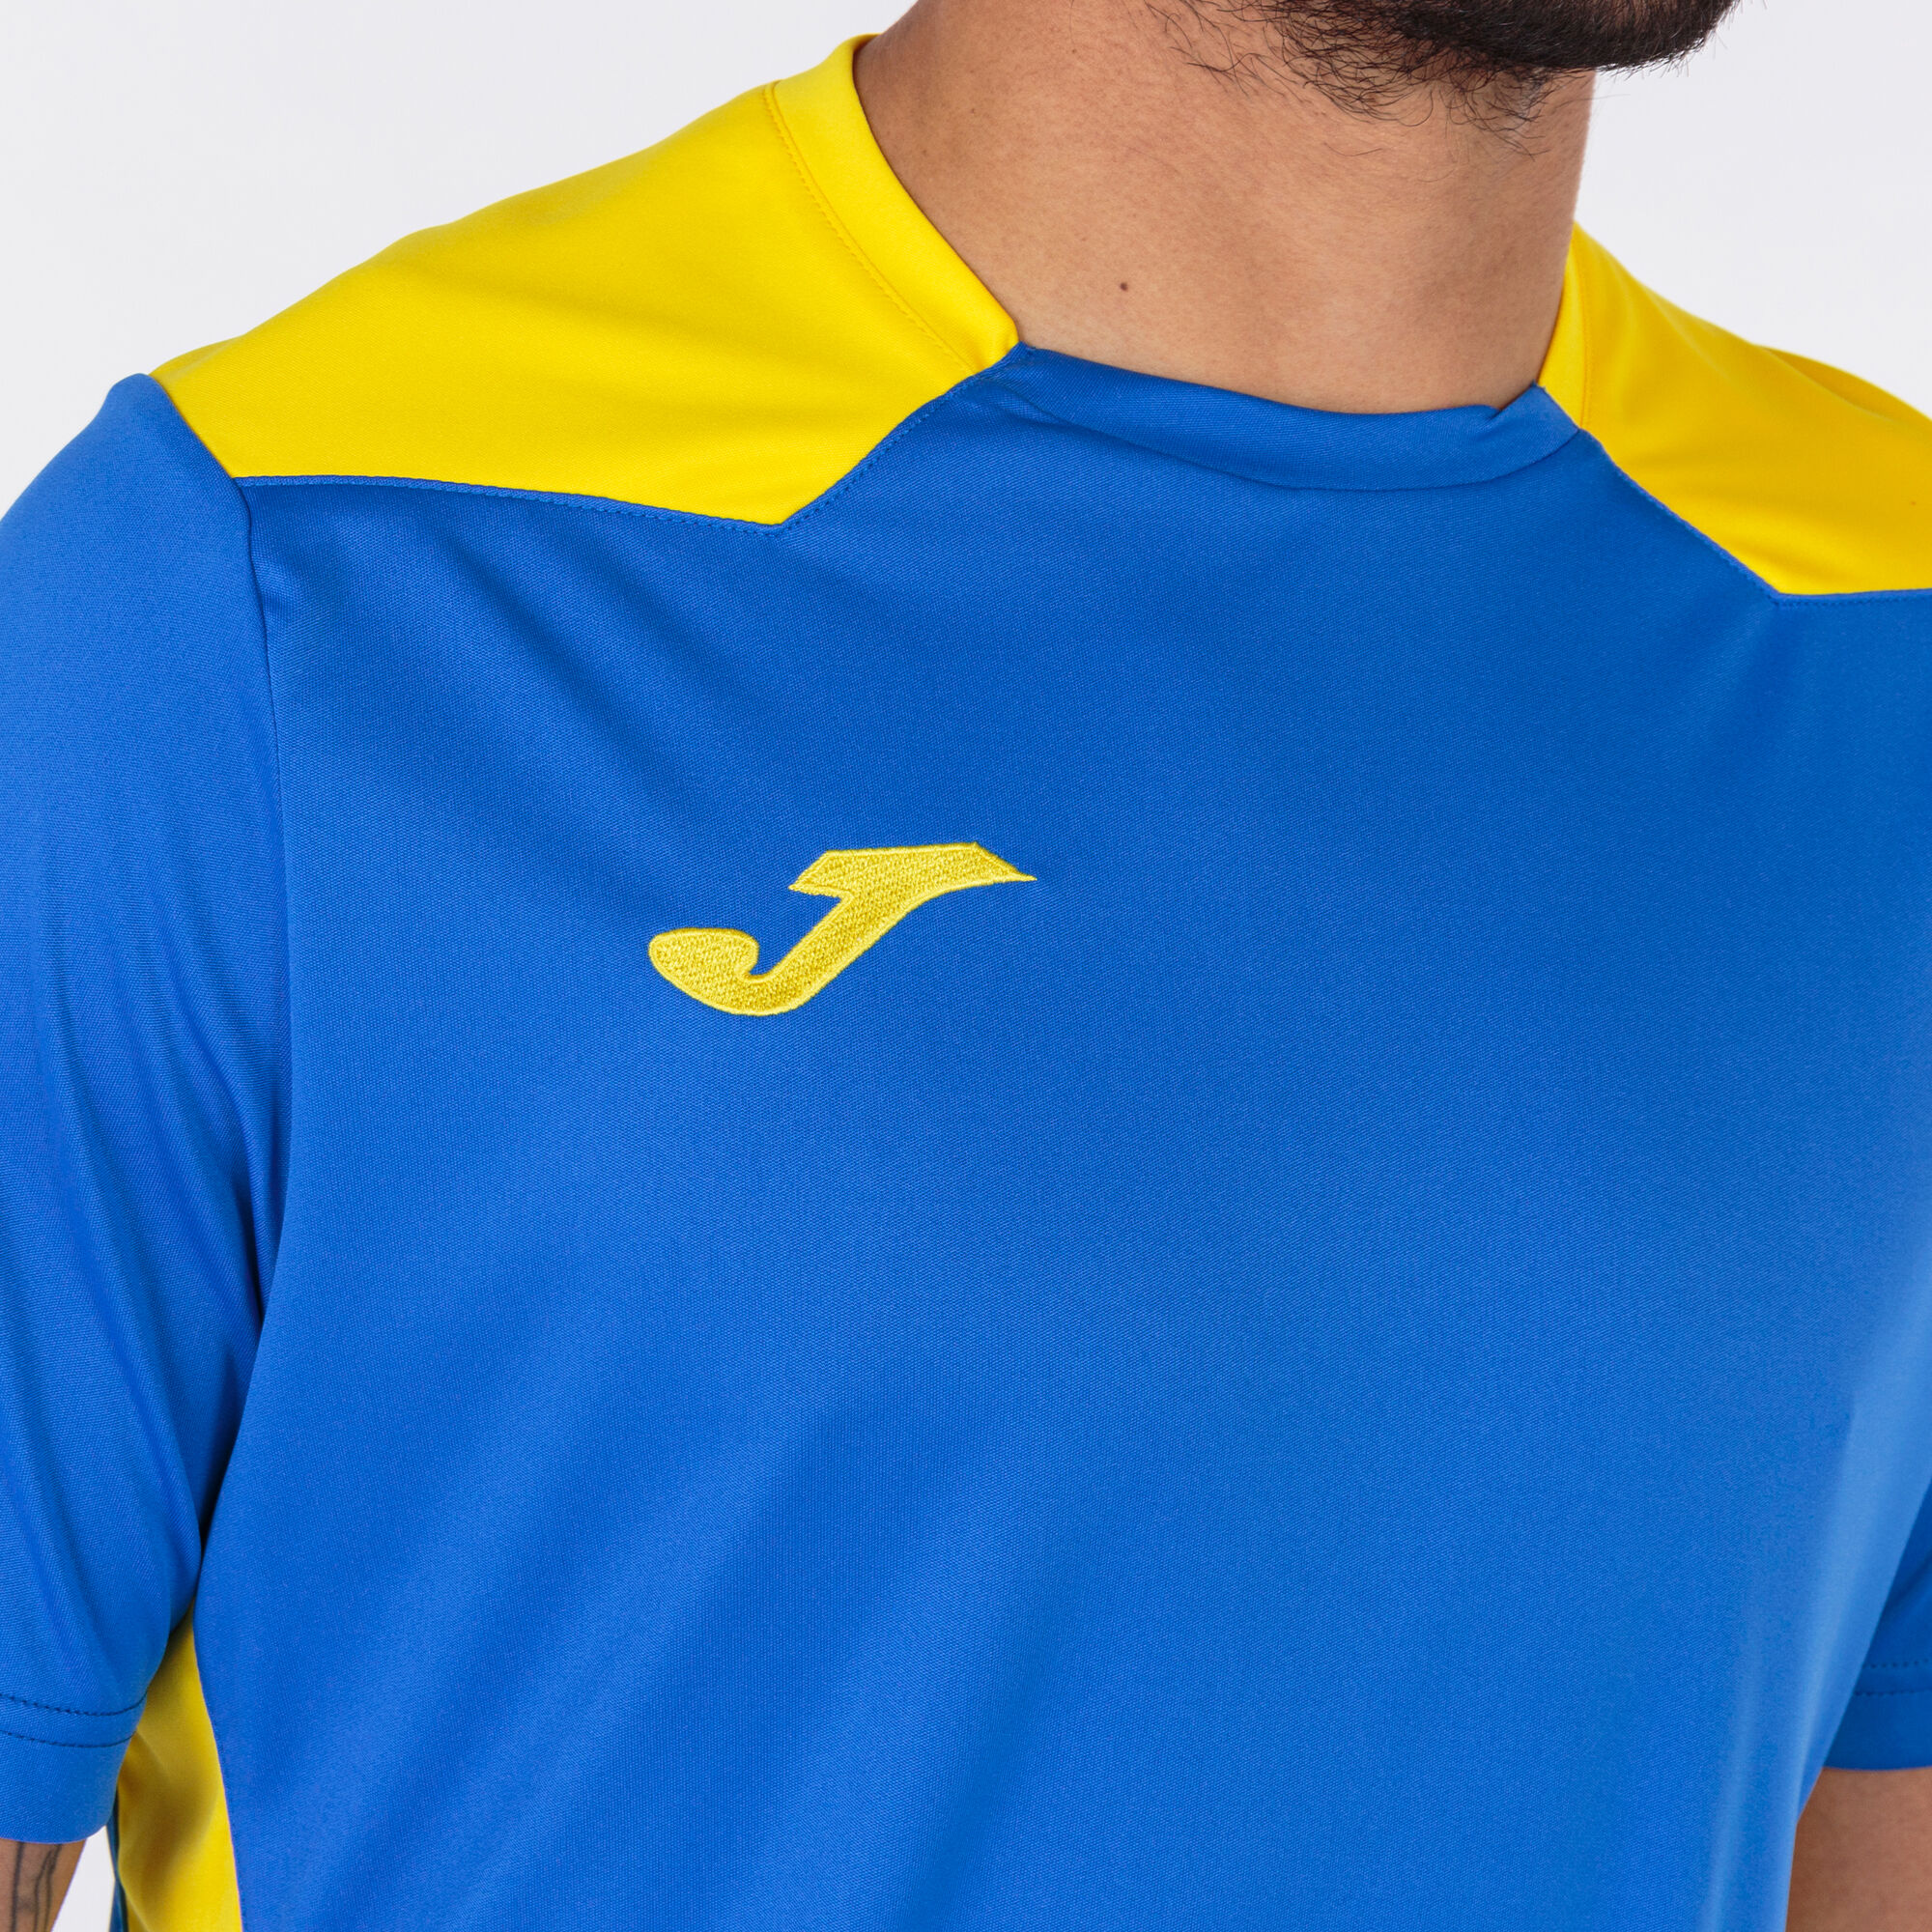 Shirt short sleeve man Championship VI royal blue yellow